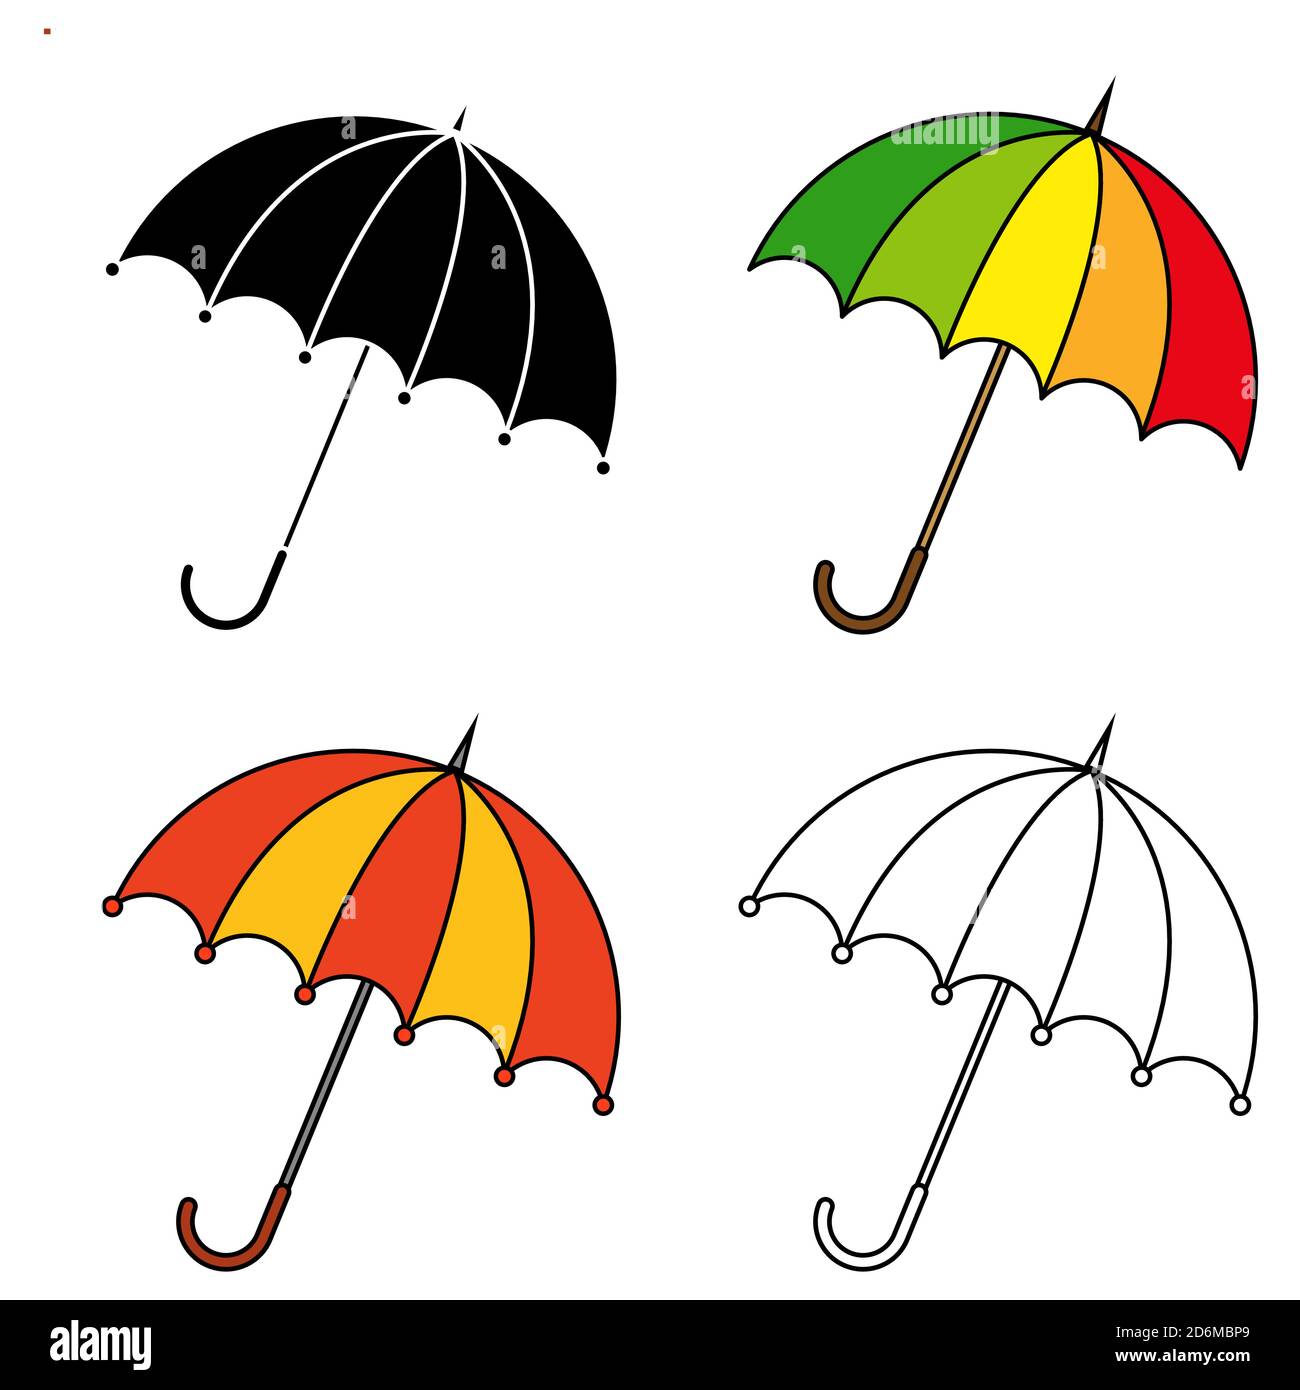 Umbrella icon set isolated on white. Parasol clip art collection. Cartoon illustration of autumnal rain protection symbols. Seasonal vectors with colo Stock Vector